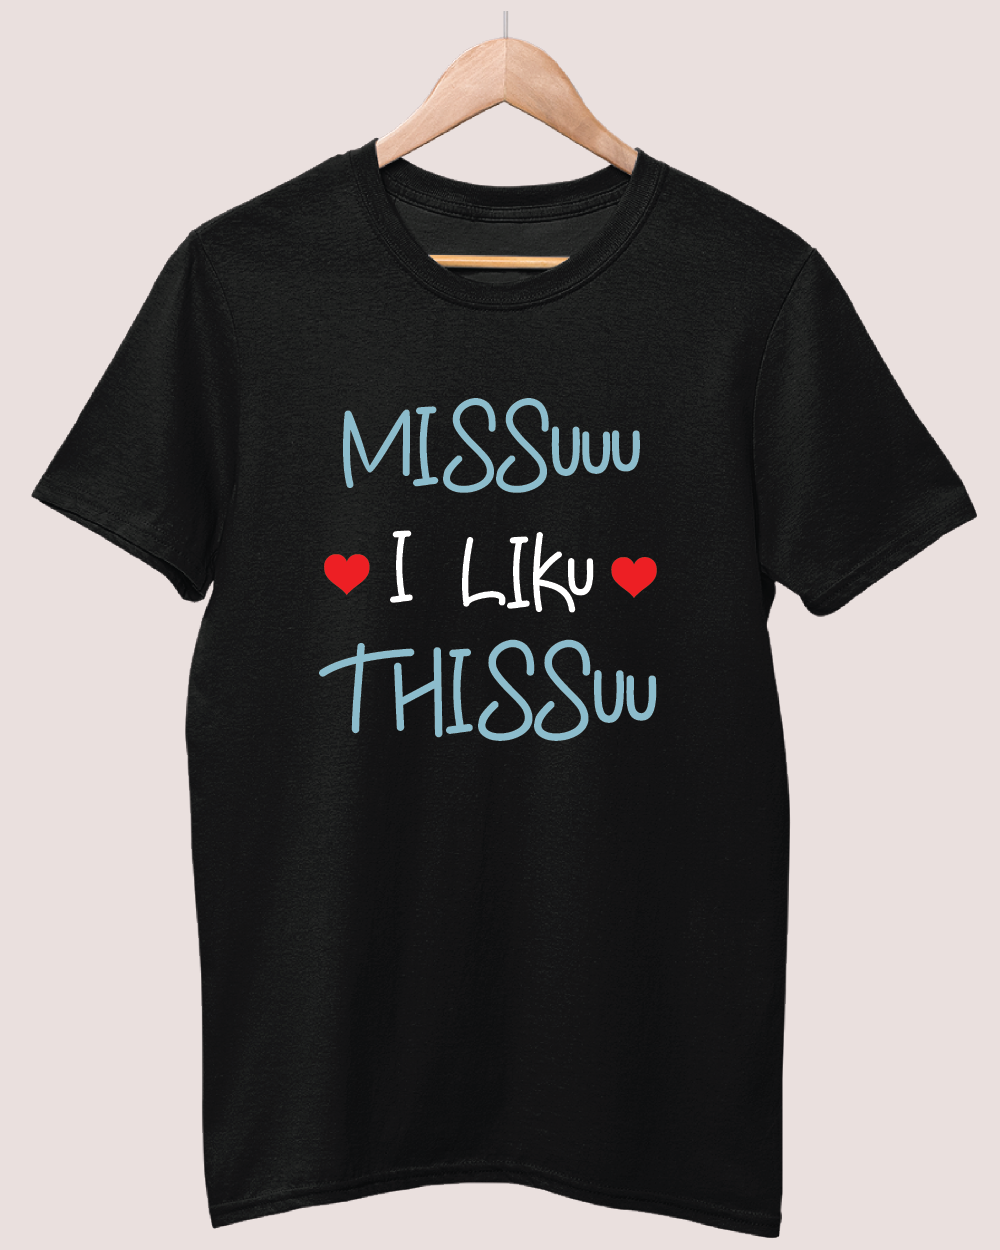 Missu I Like Thissu 2 T-shirt